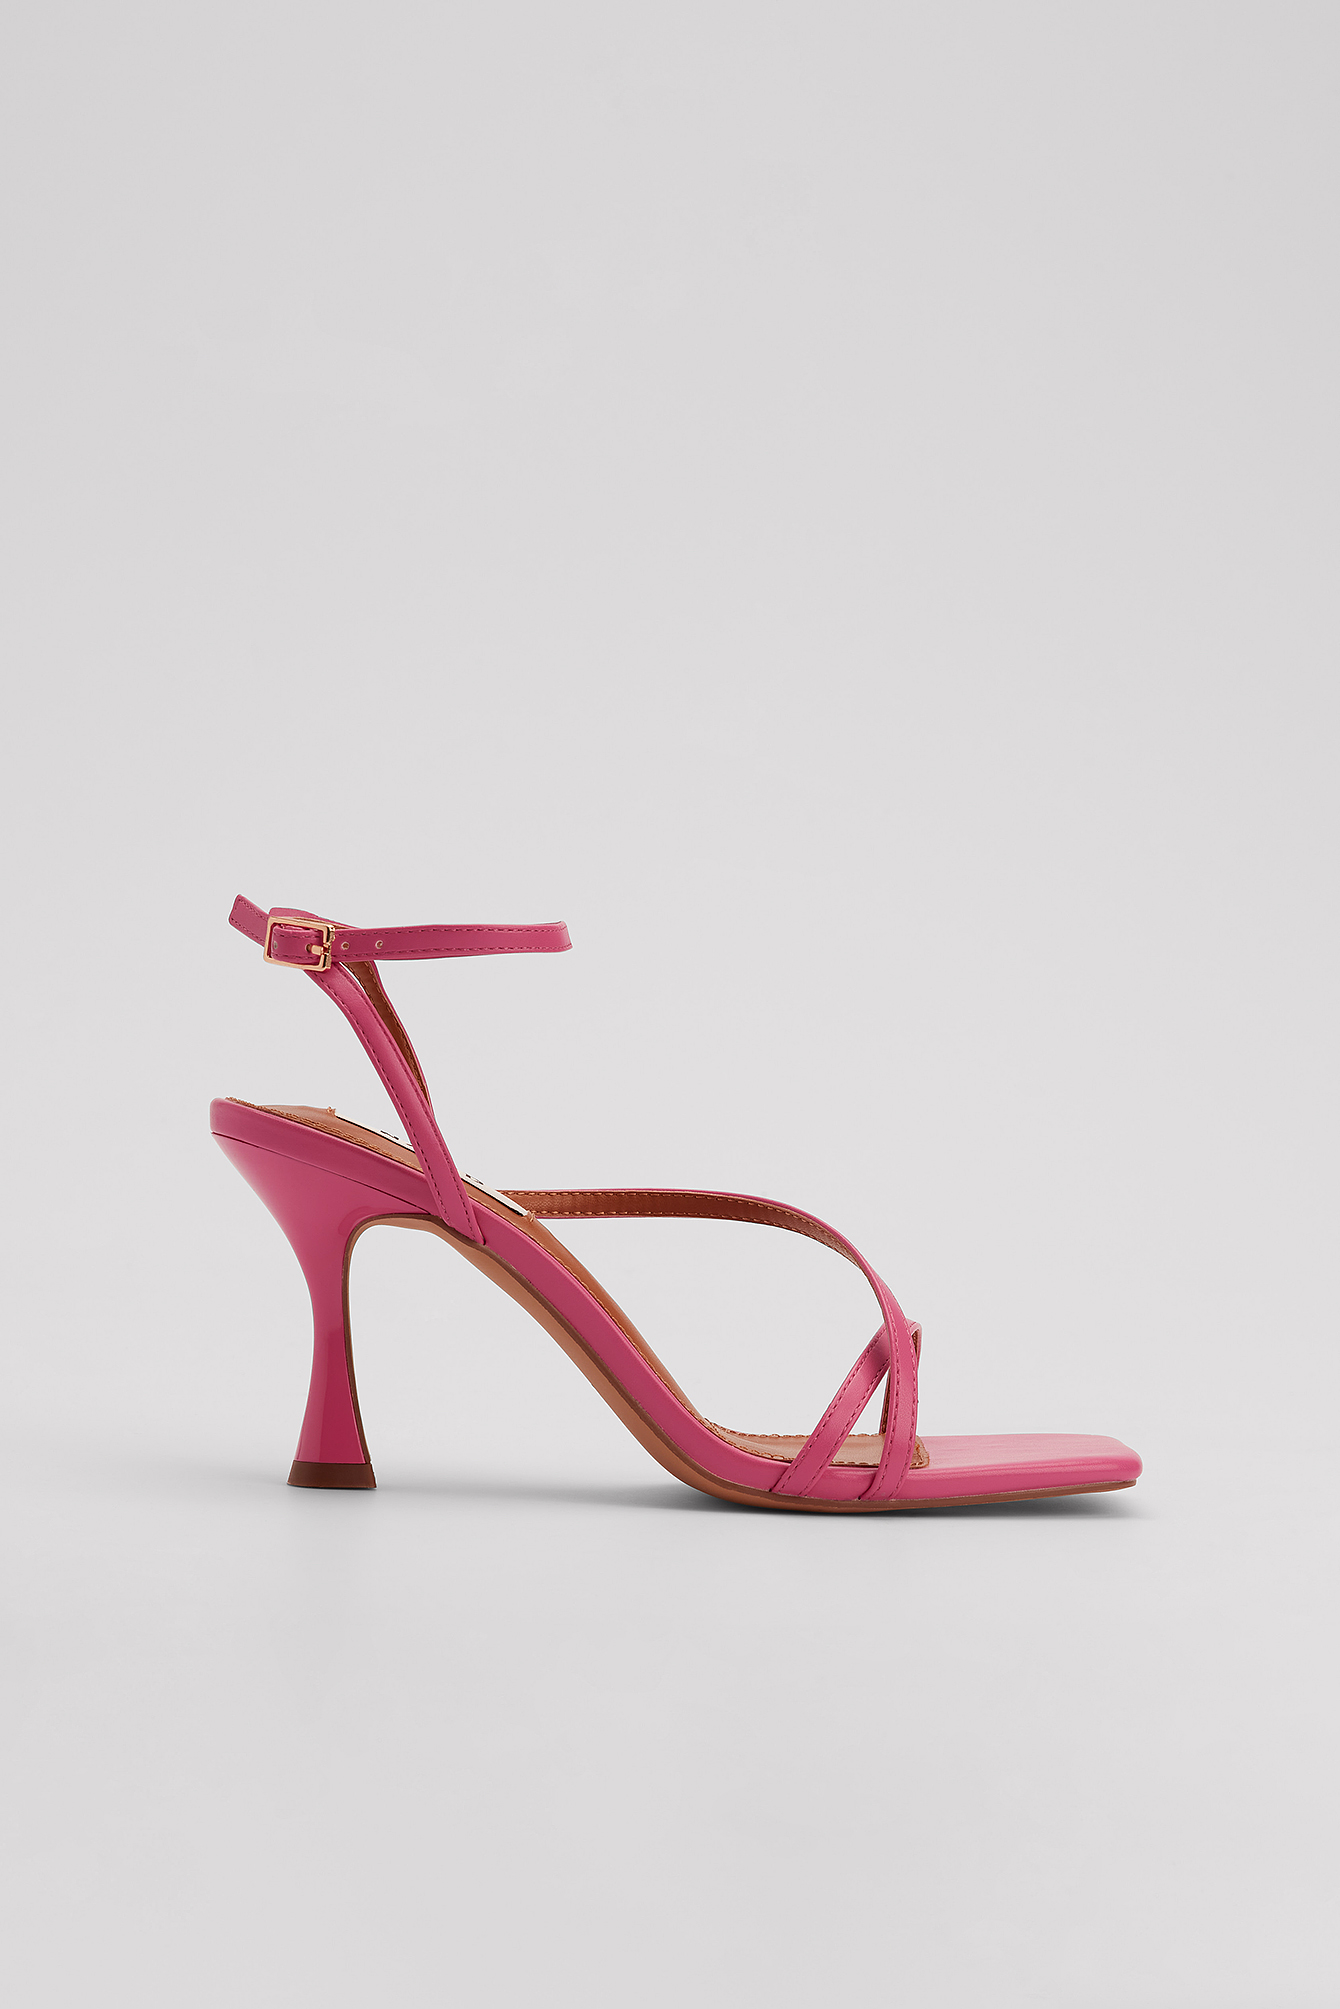 NA-KD Shoes Hourglass Heels - Pink